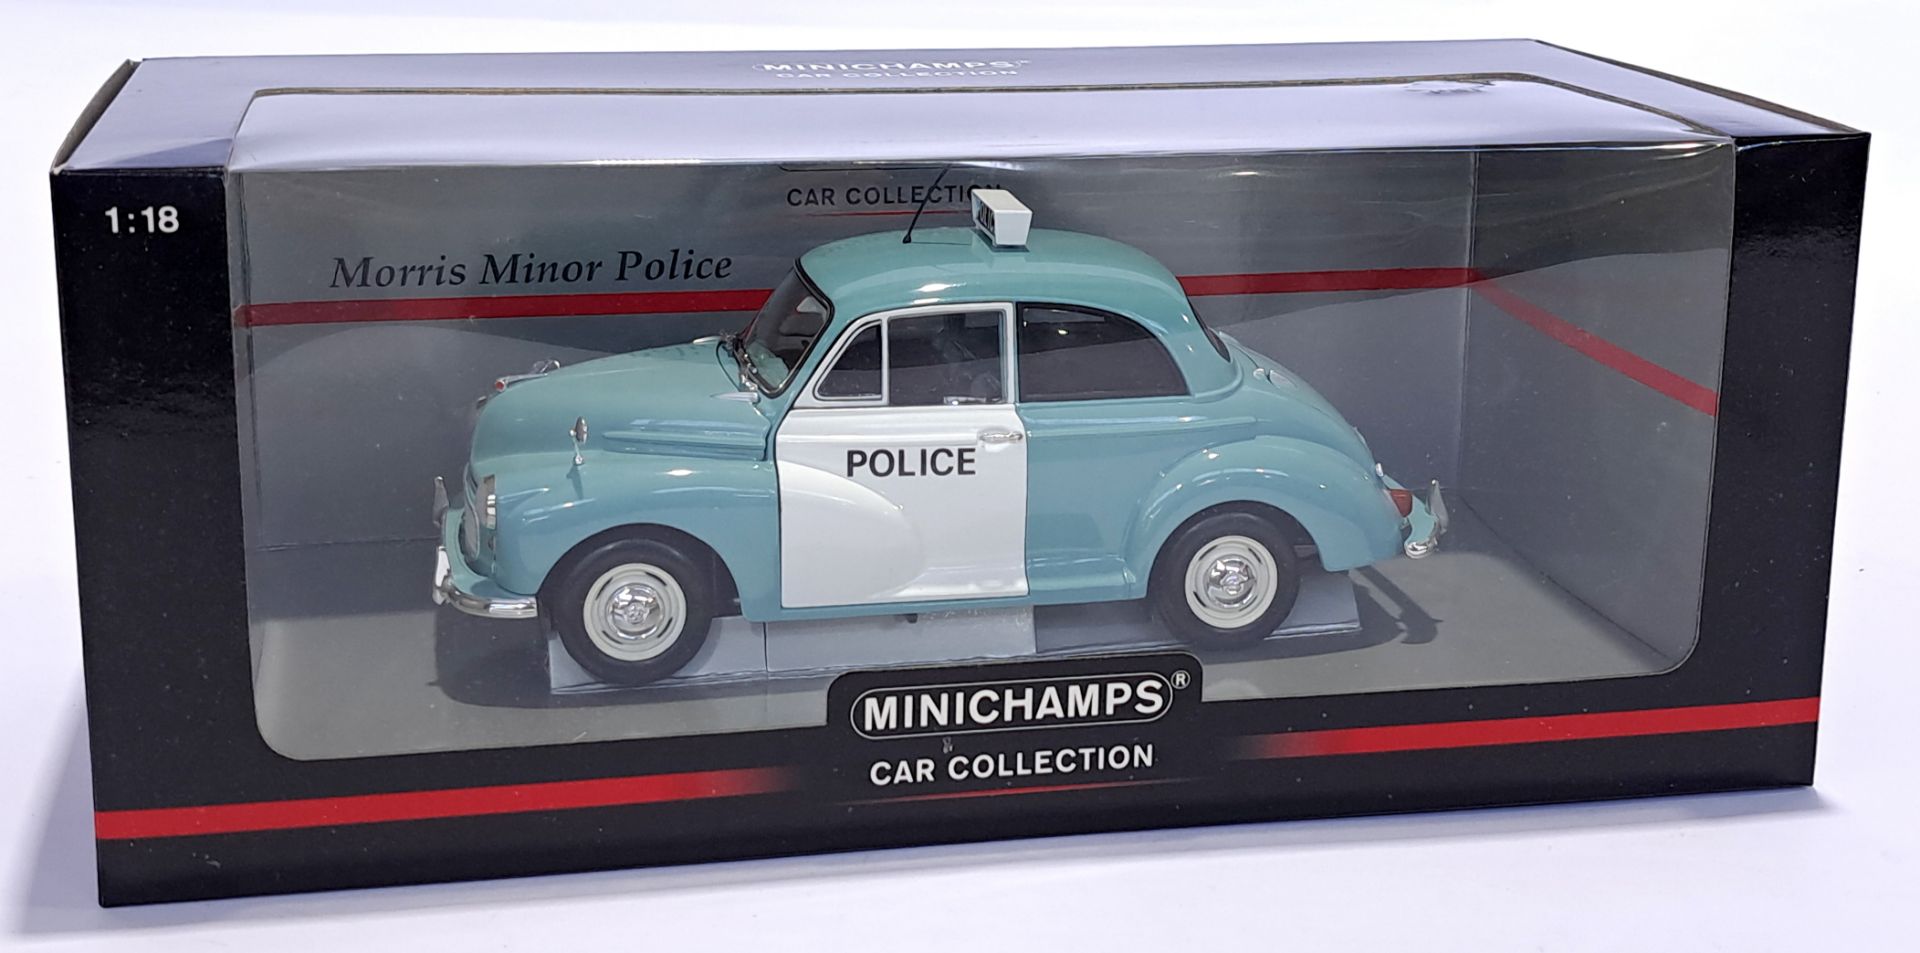 Minichamps (Paul's Model Art) 1:18 scale Morris Minor Police